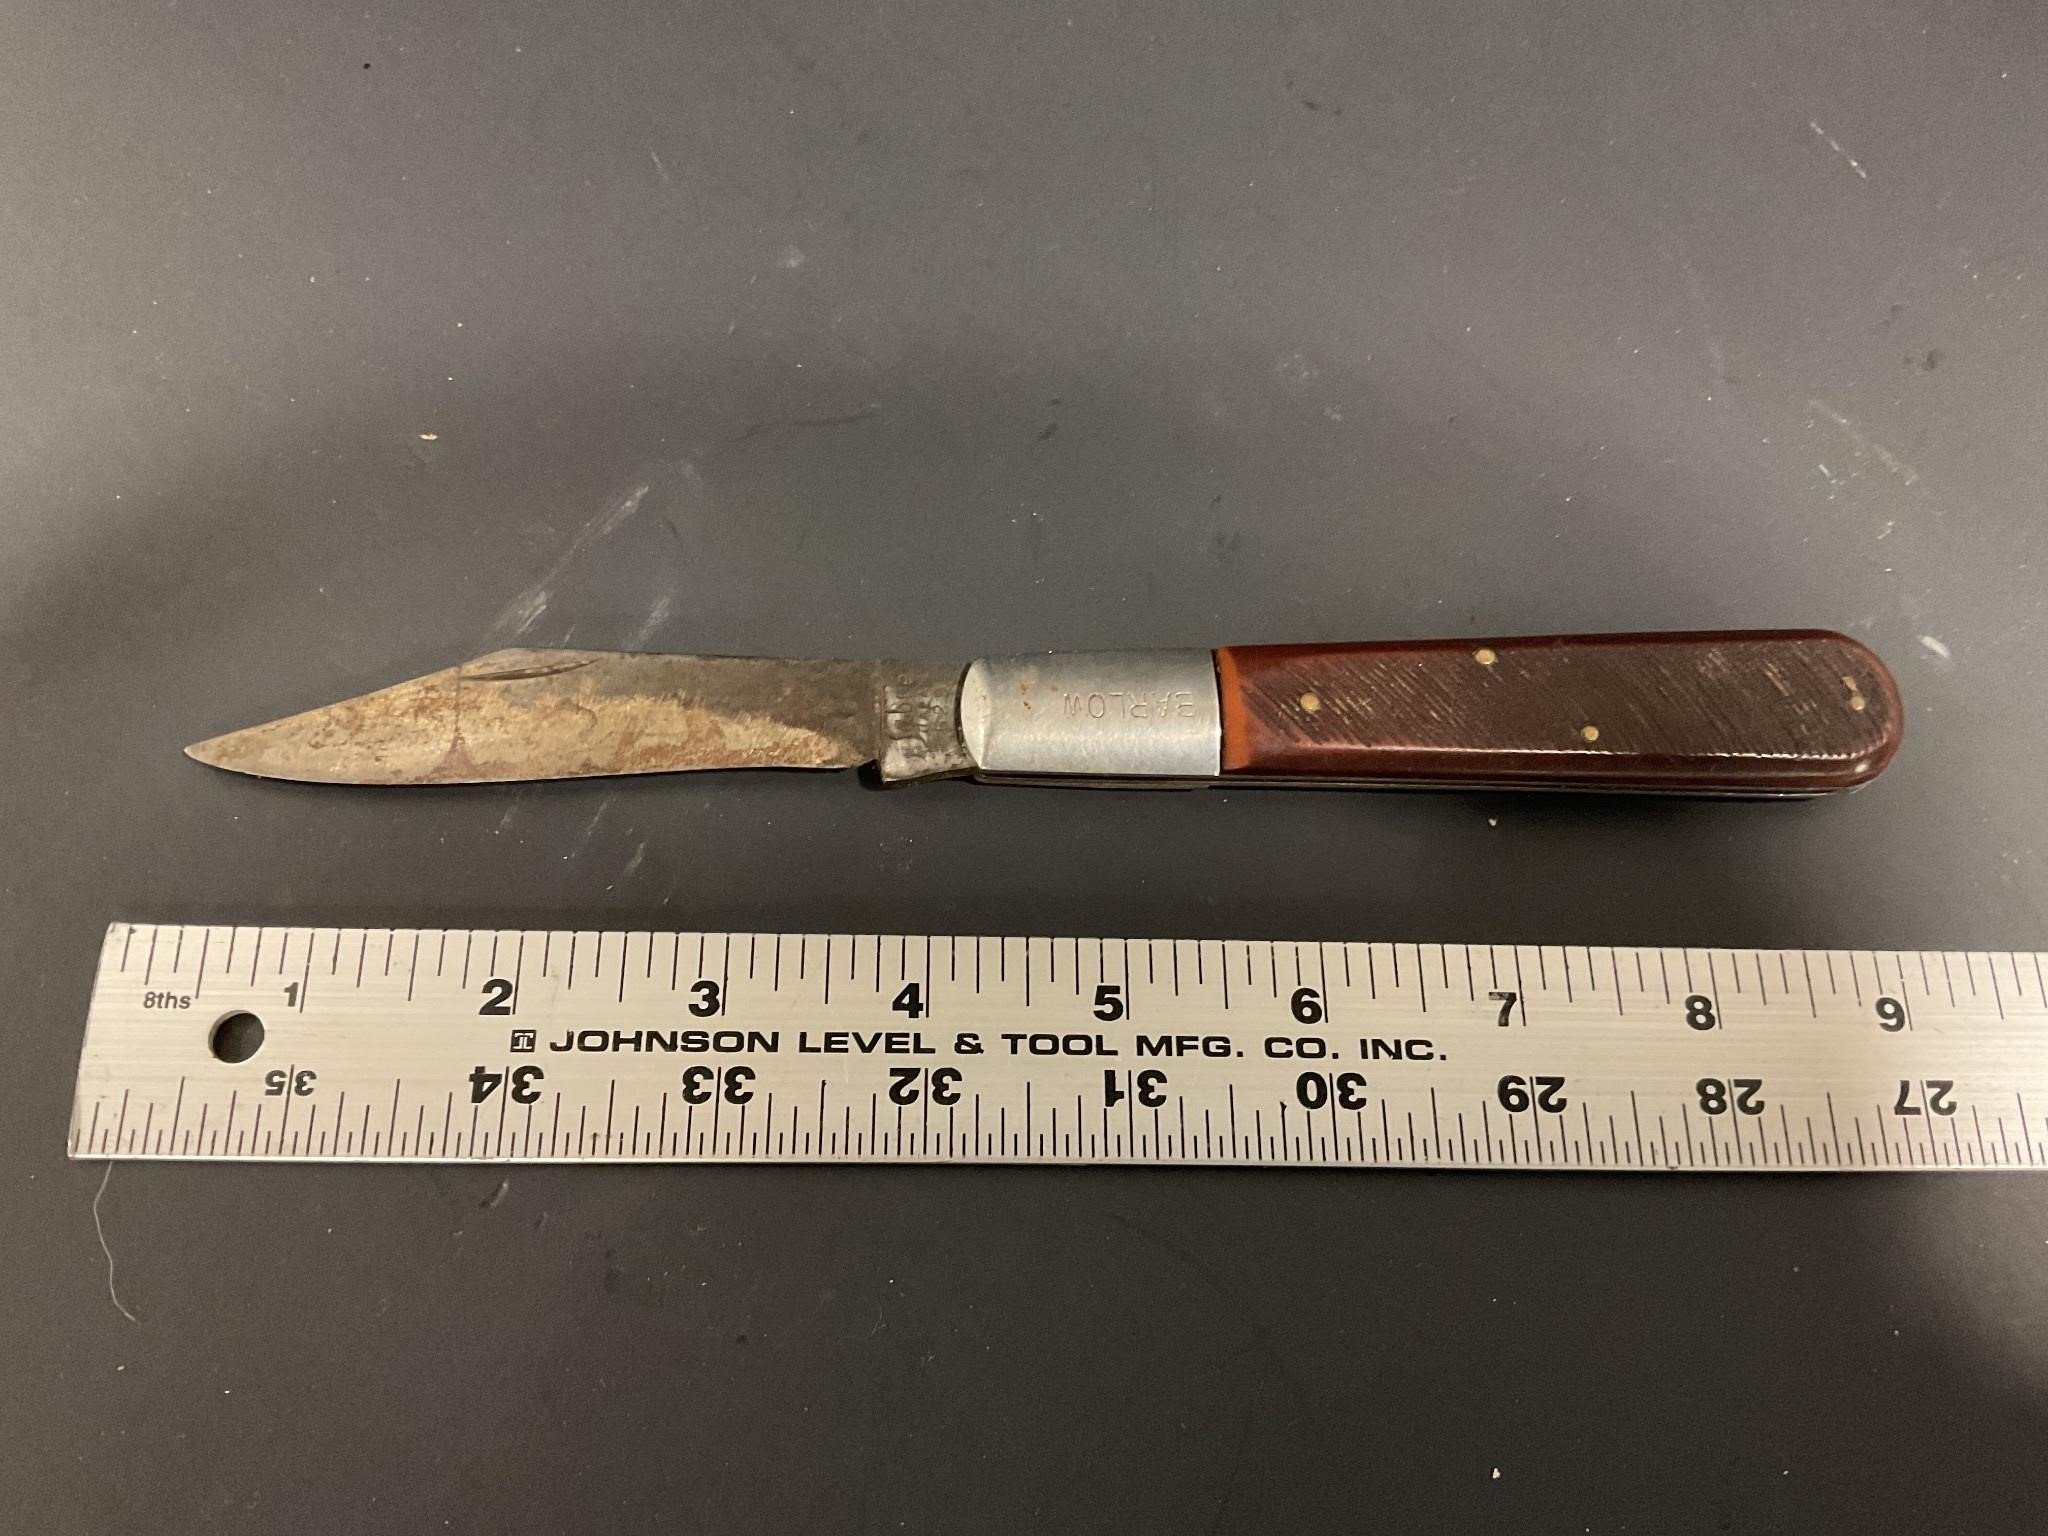 Barlow knife